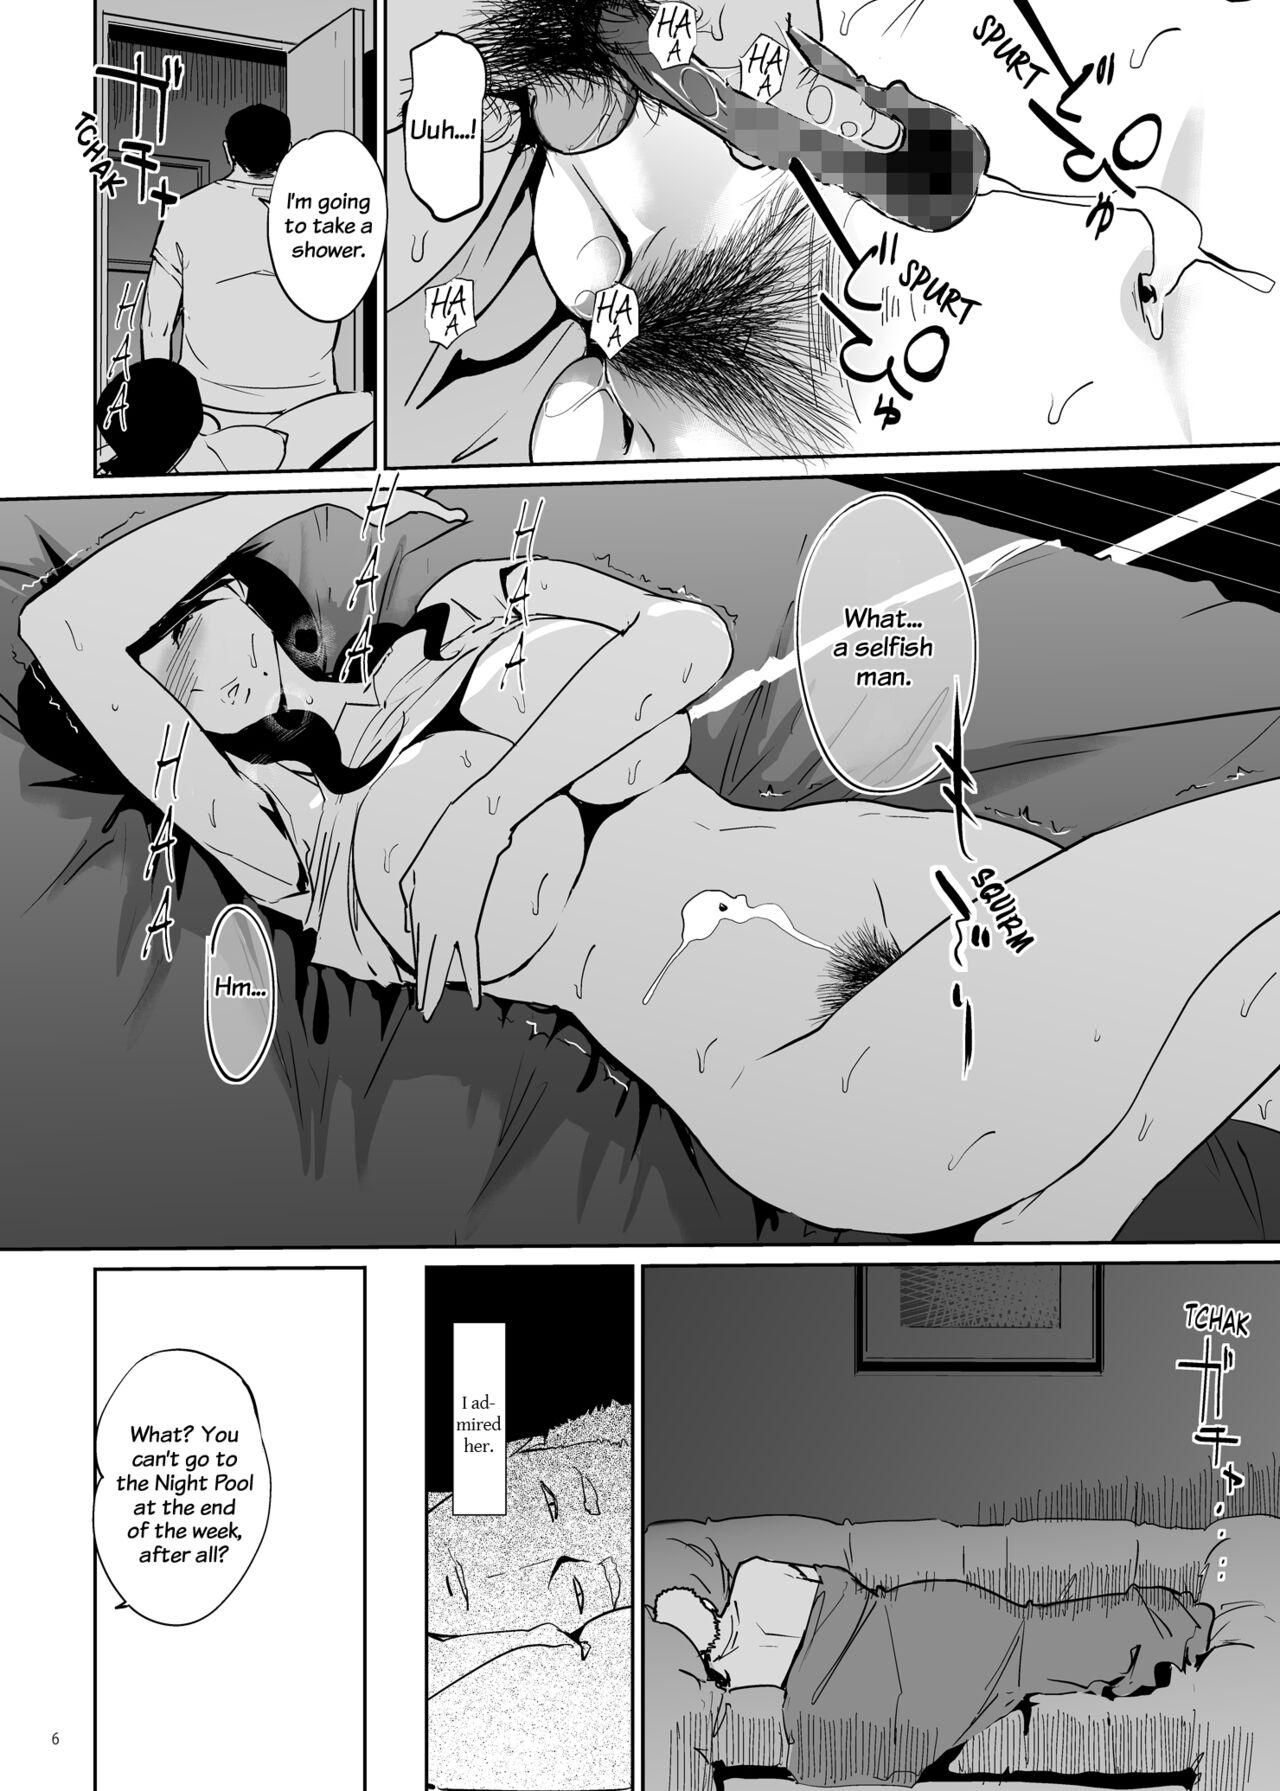 Hymen NTR Midnight Pool - Original Chudai - Page 5